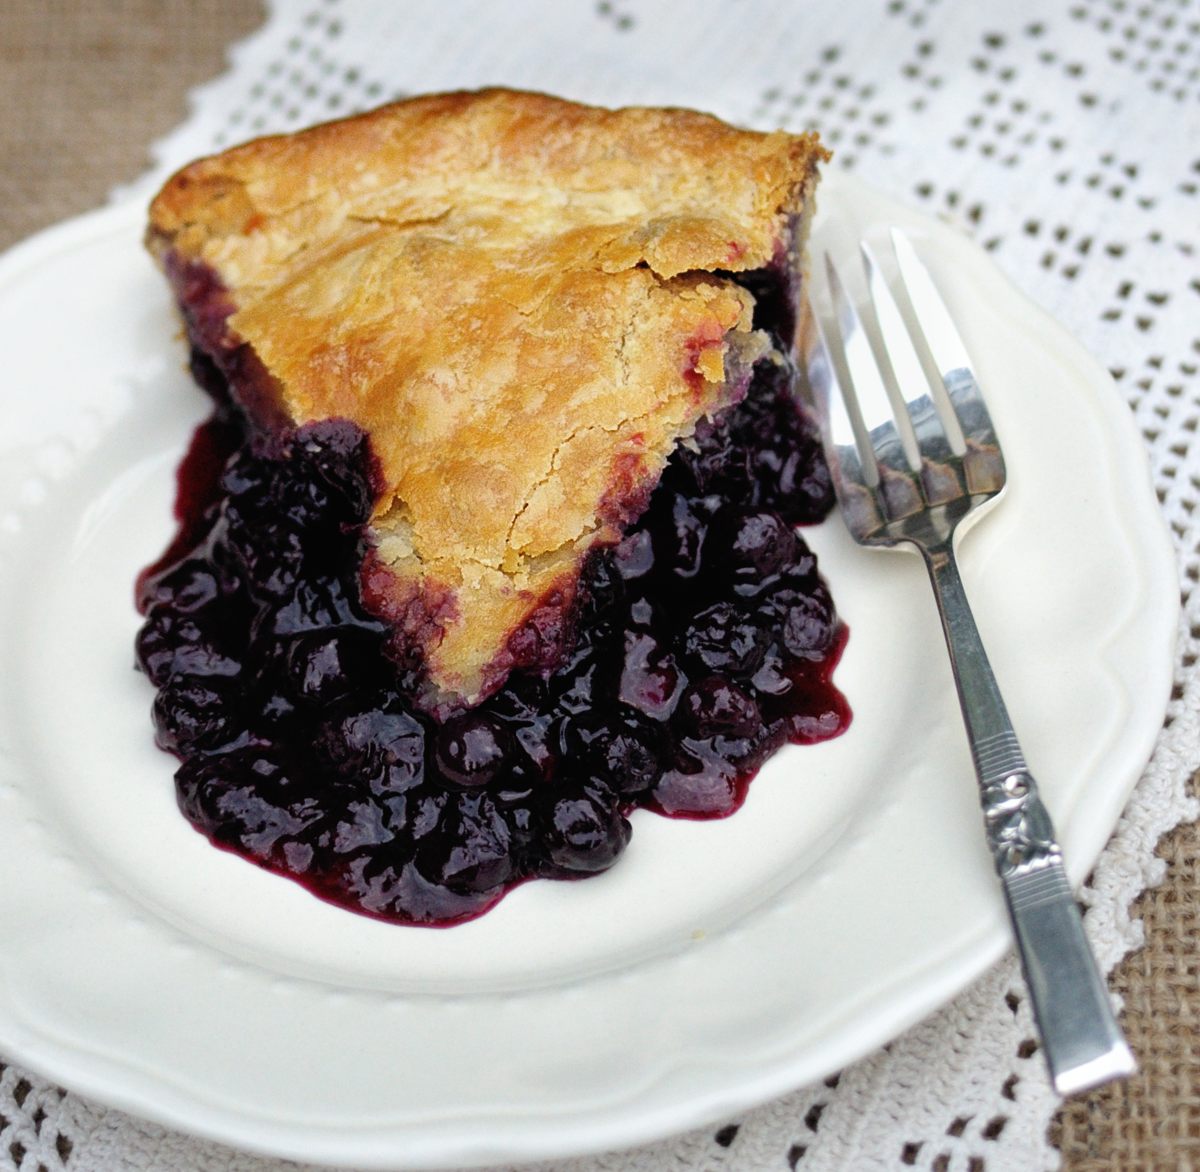 Blueberry Pie with Mom's Dessert Fork, Crochet Cloth